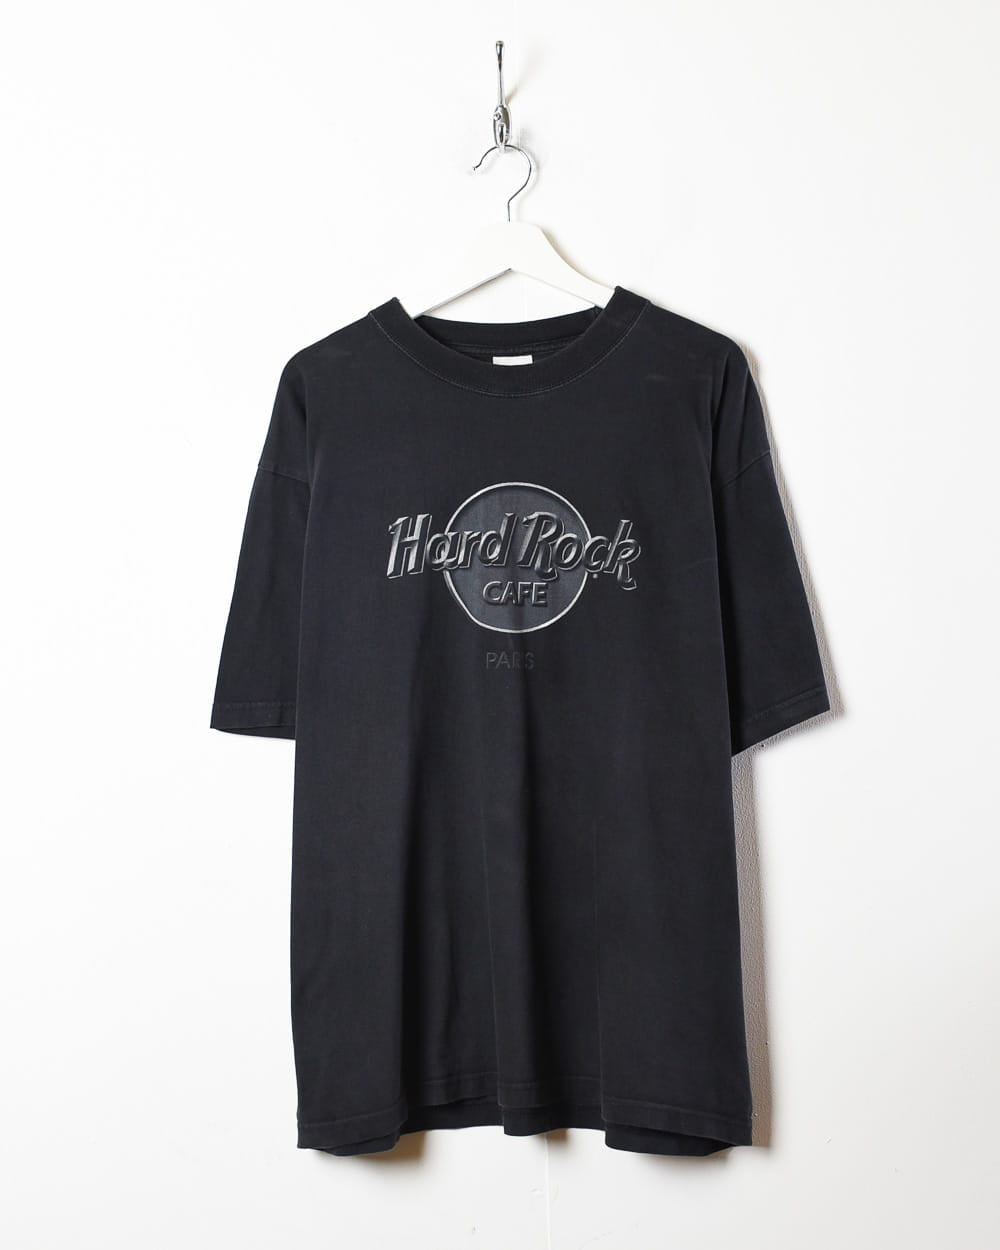 Black Hard Rock Cafe Paris T-Shirt - X-Large